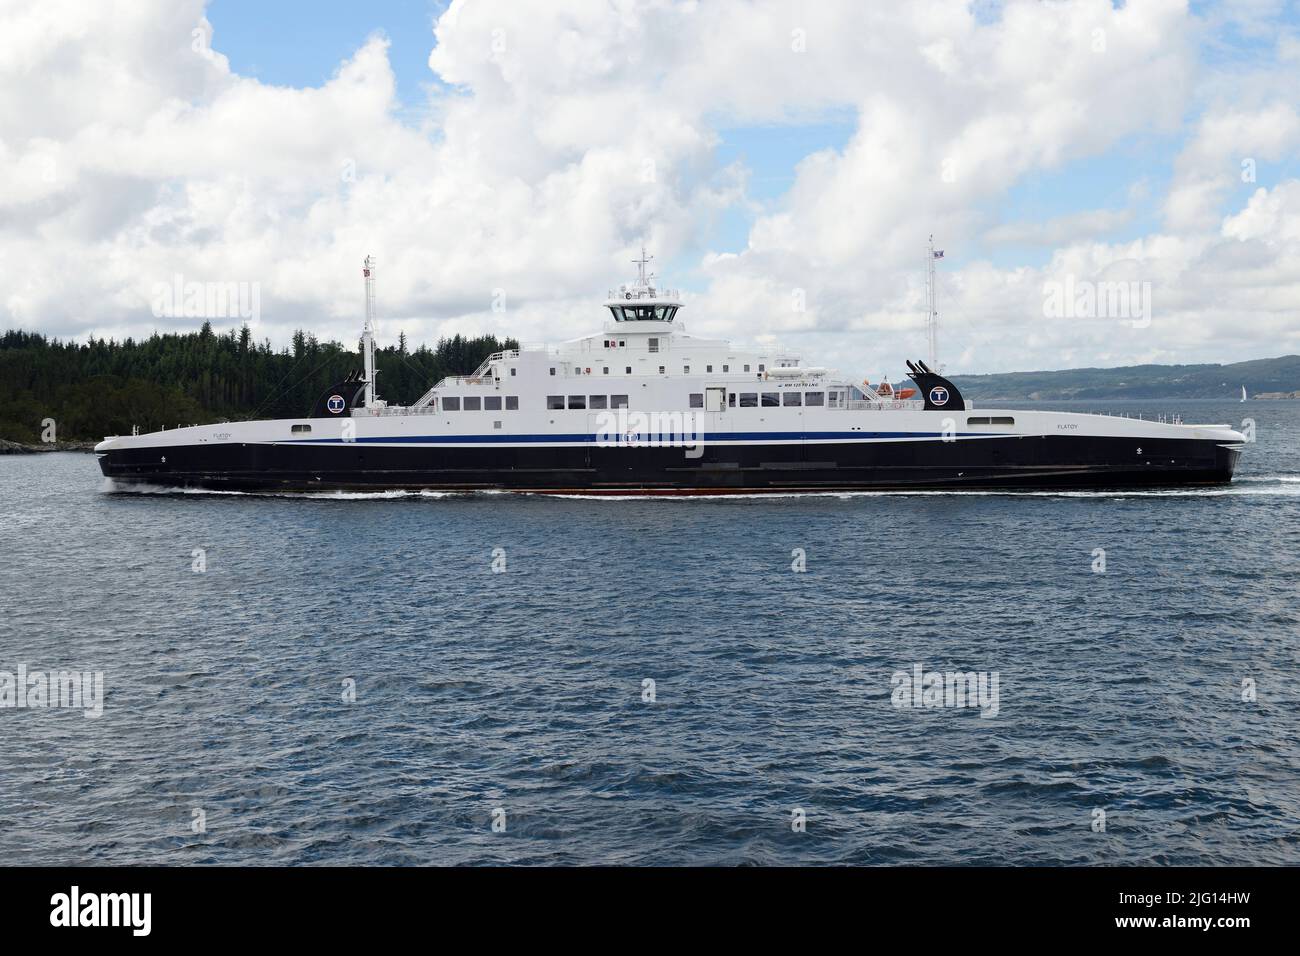 Passenger;ship;ferry;ferje;flatøy;Noruega;النرويج;挪威;挪威;Noorwegen;Norja;Norvège;Norwegen;ノルウェー;Norwegia;Норвегия;Norway;Norge;Noreg;Norga Stock Photo